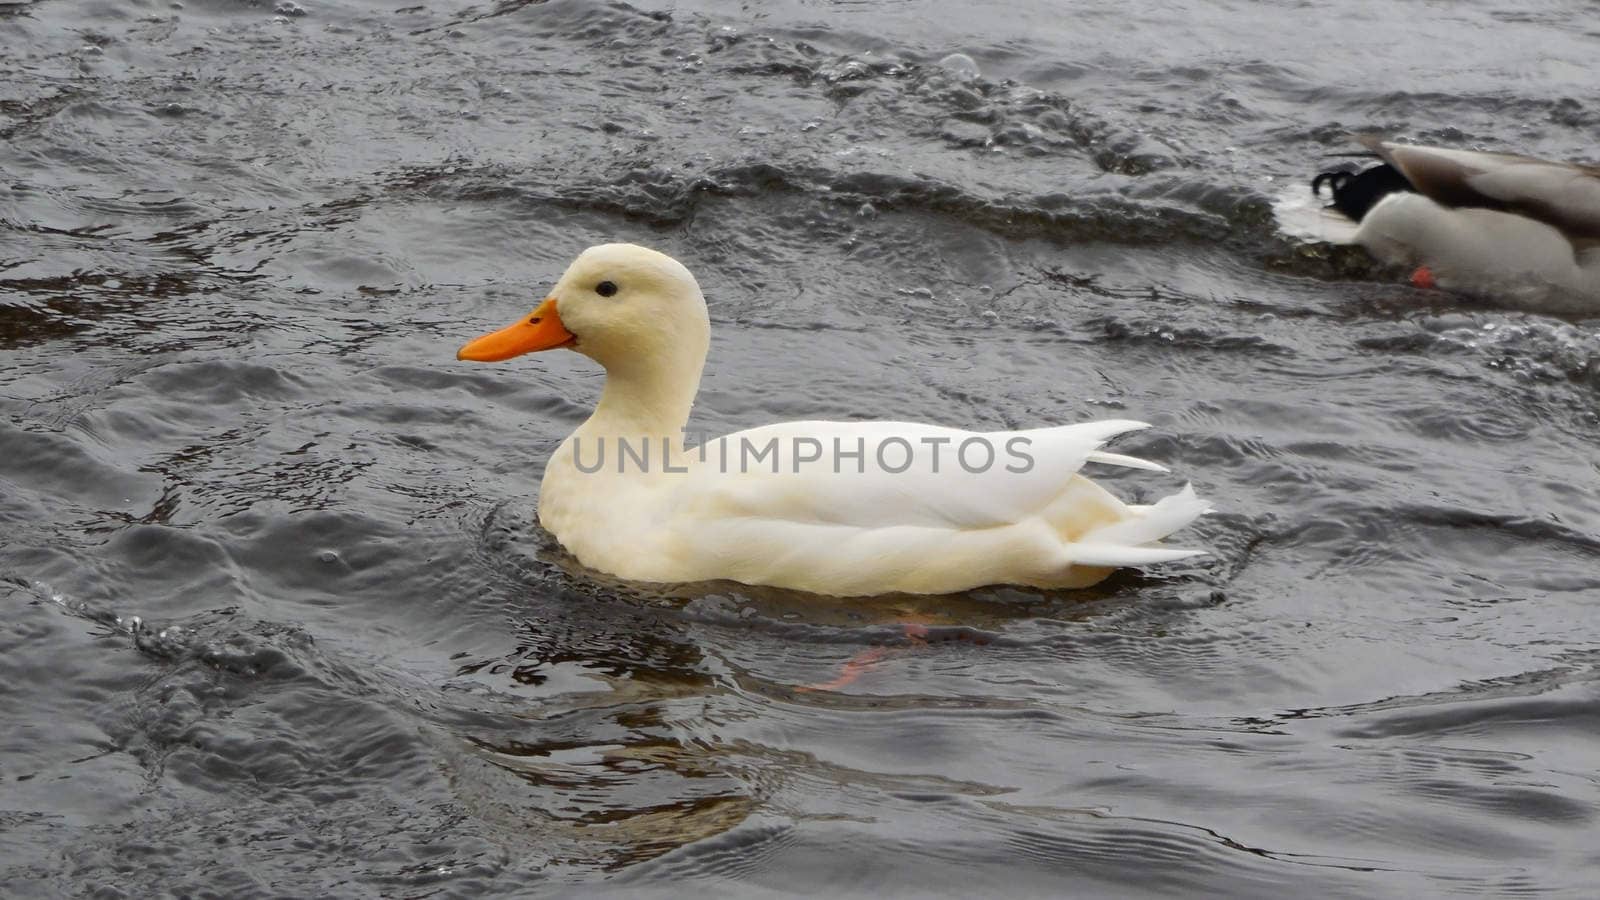 albino duck swims in the lake flock of Gatchina Park, Russia. by olga_ovchinnikova